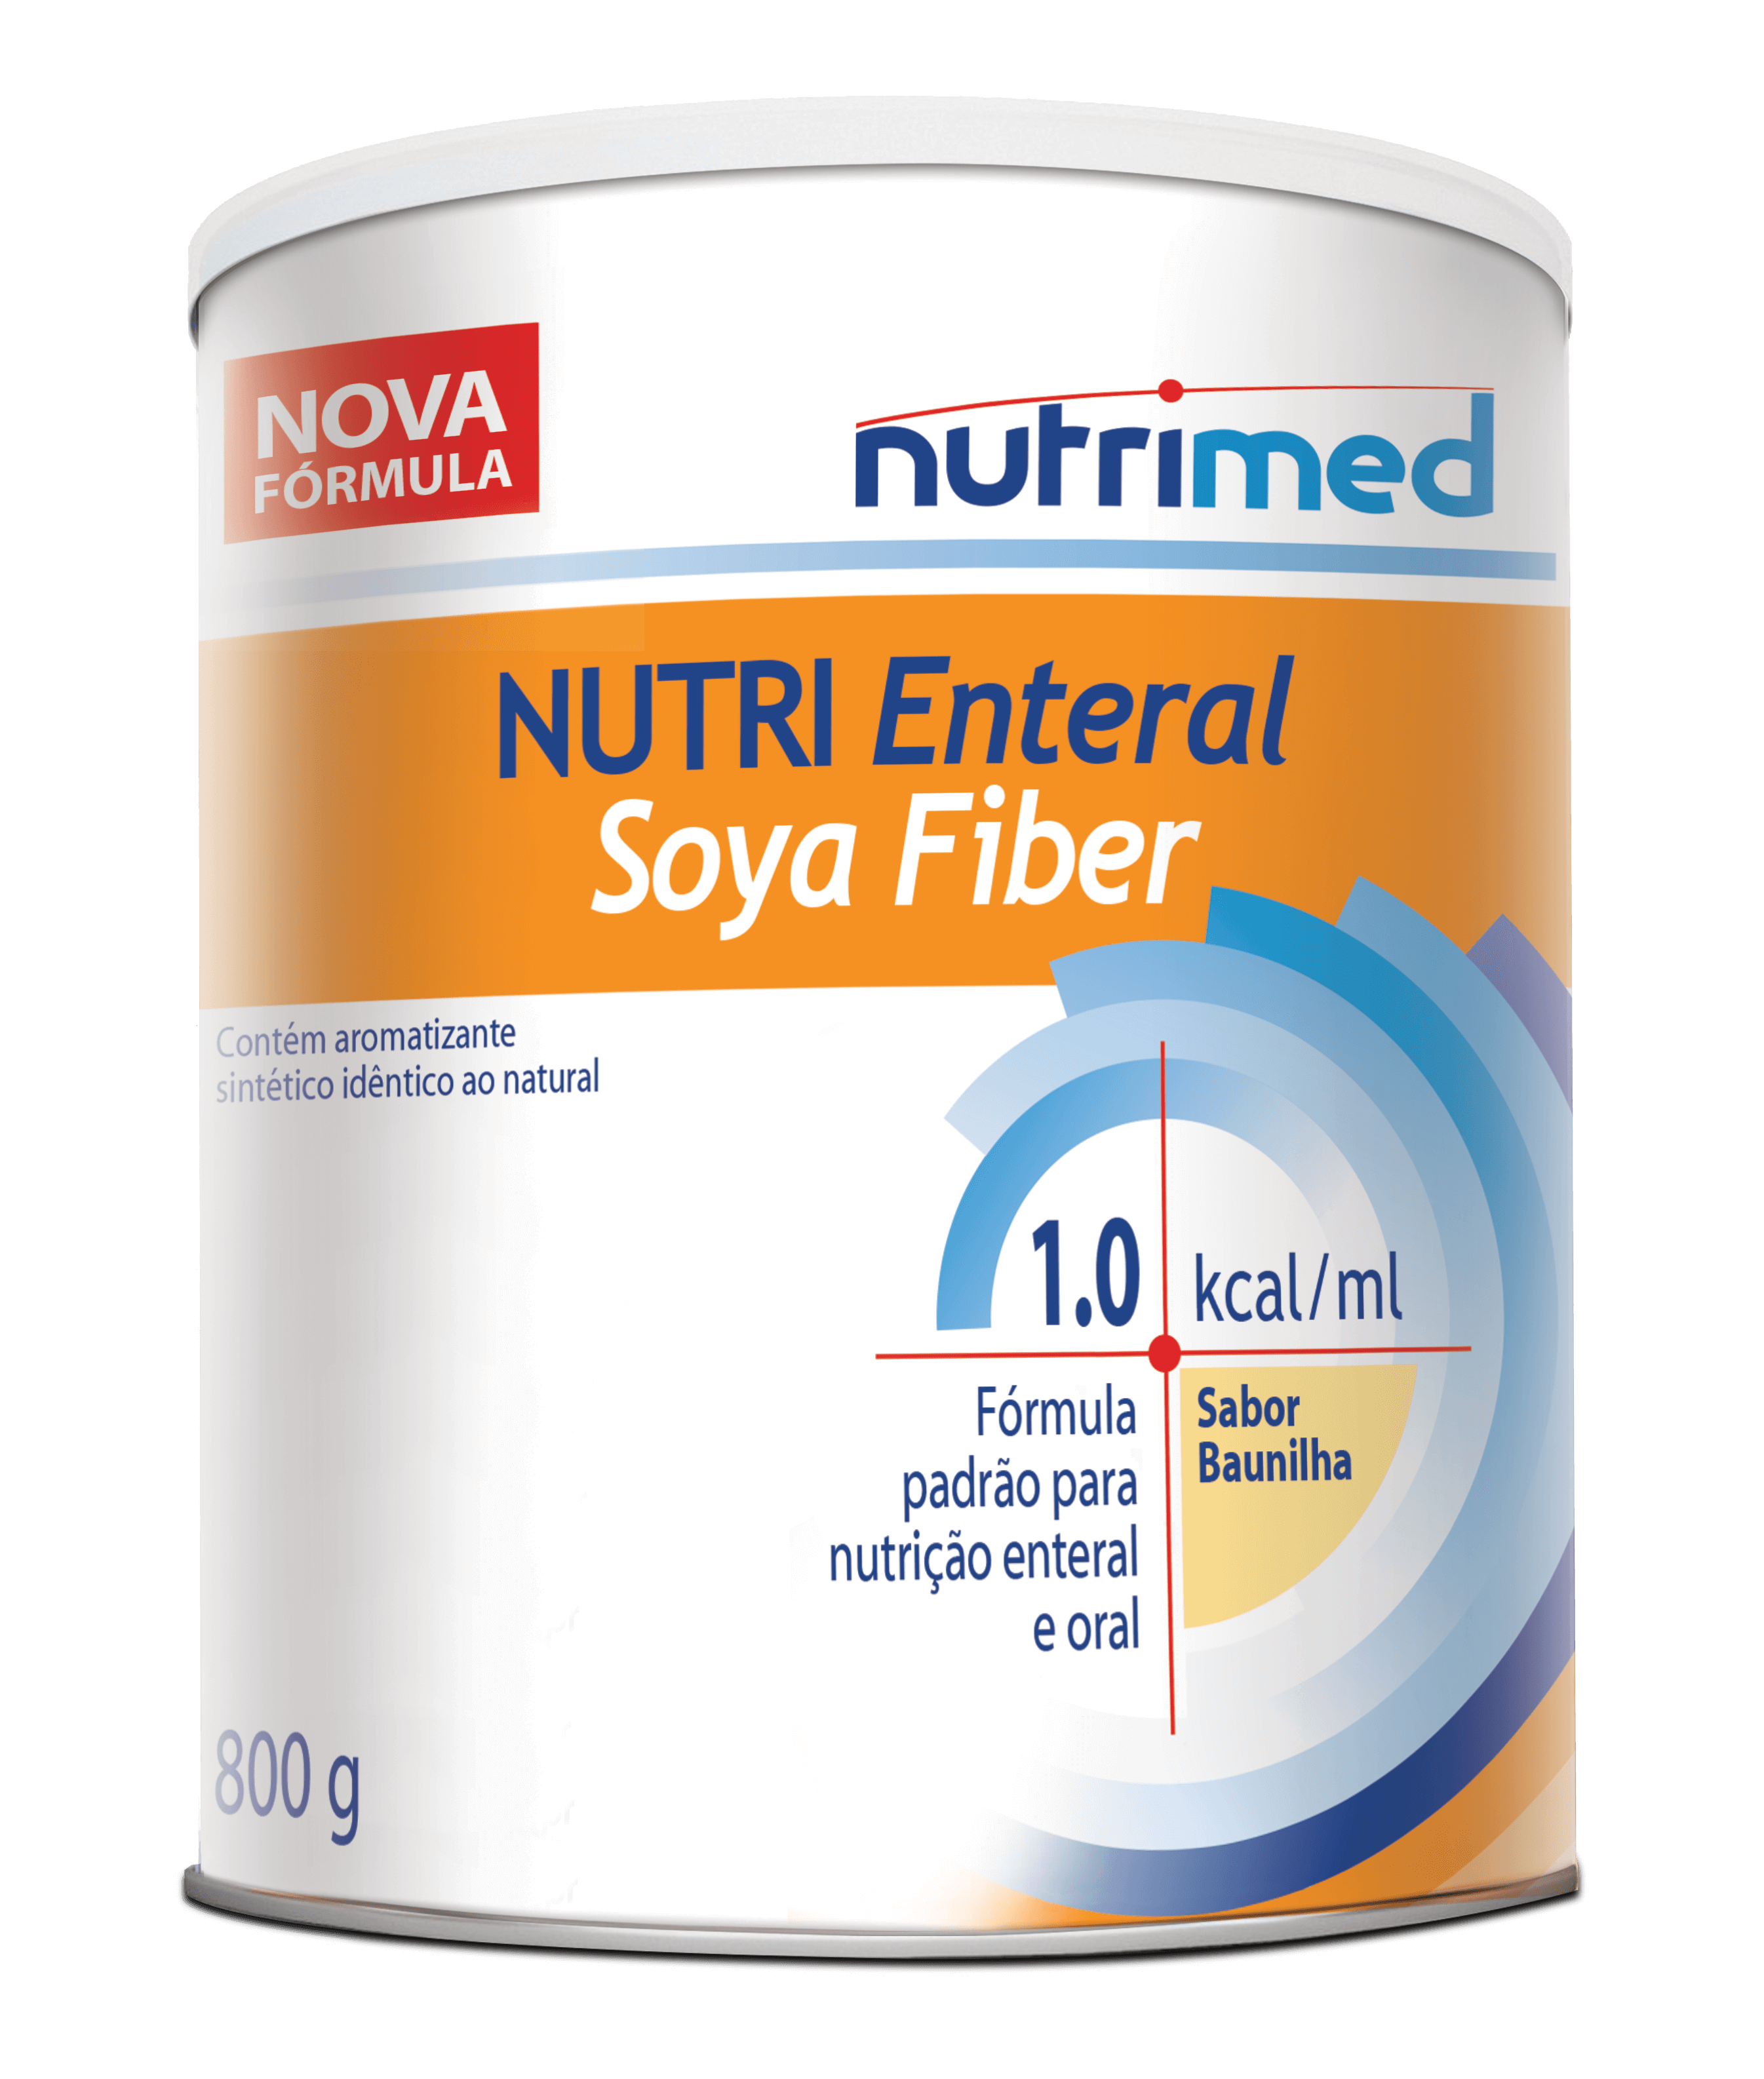 NUTRI Enteral